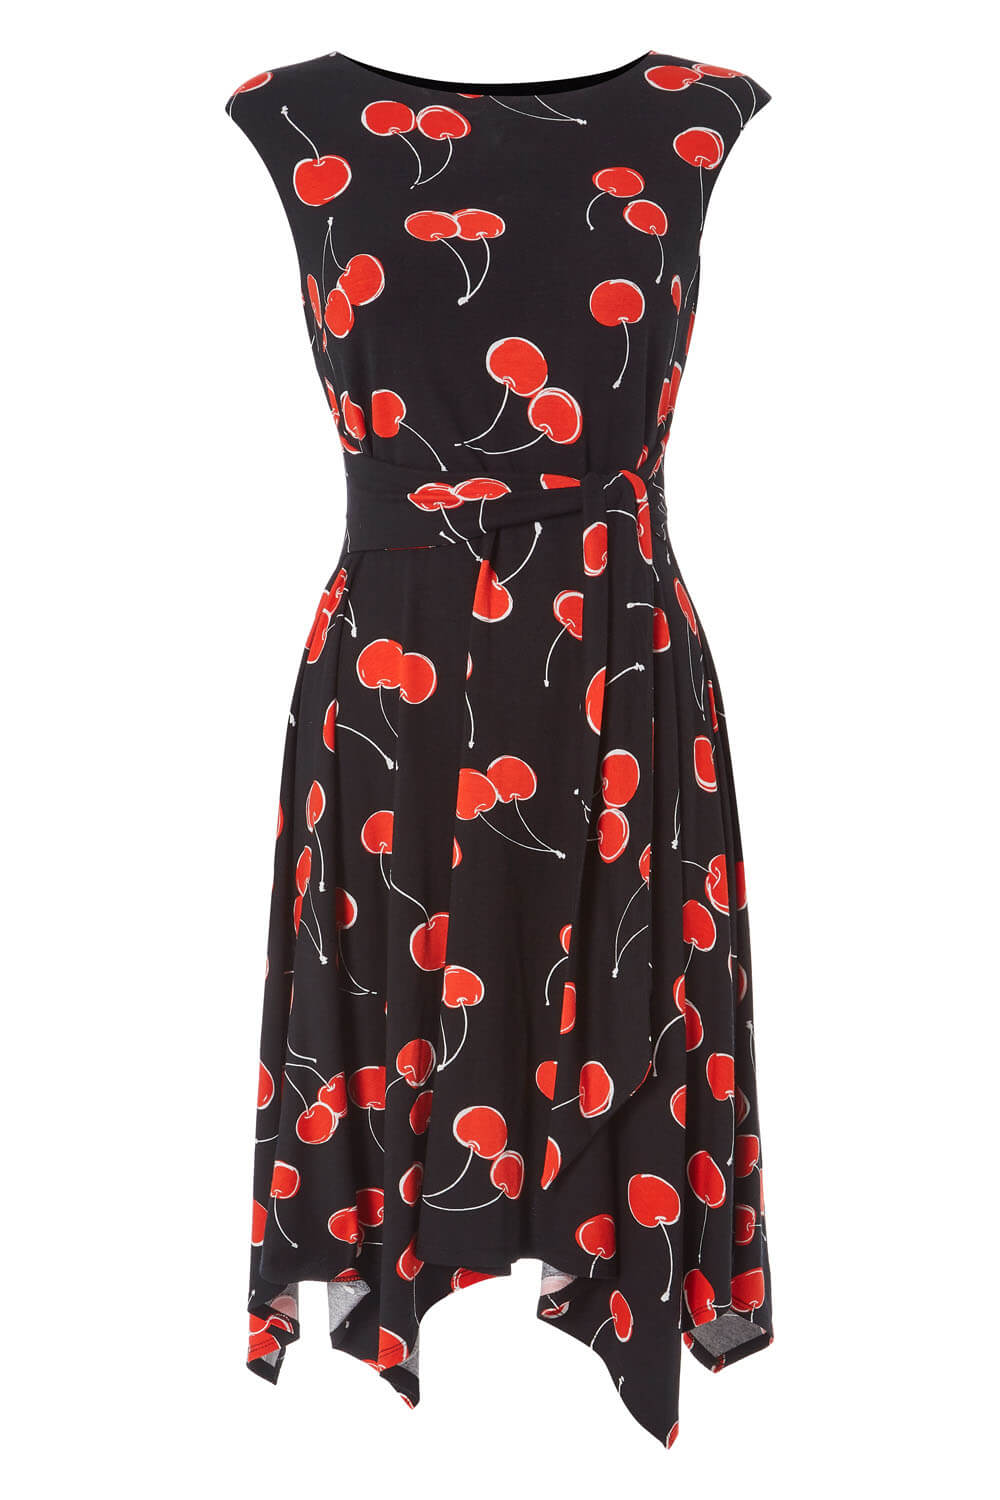 ORANGE Cherry Print Hanky Hem Dress, Image 4 of 4